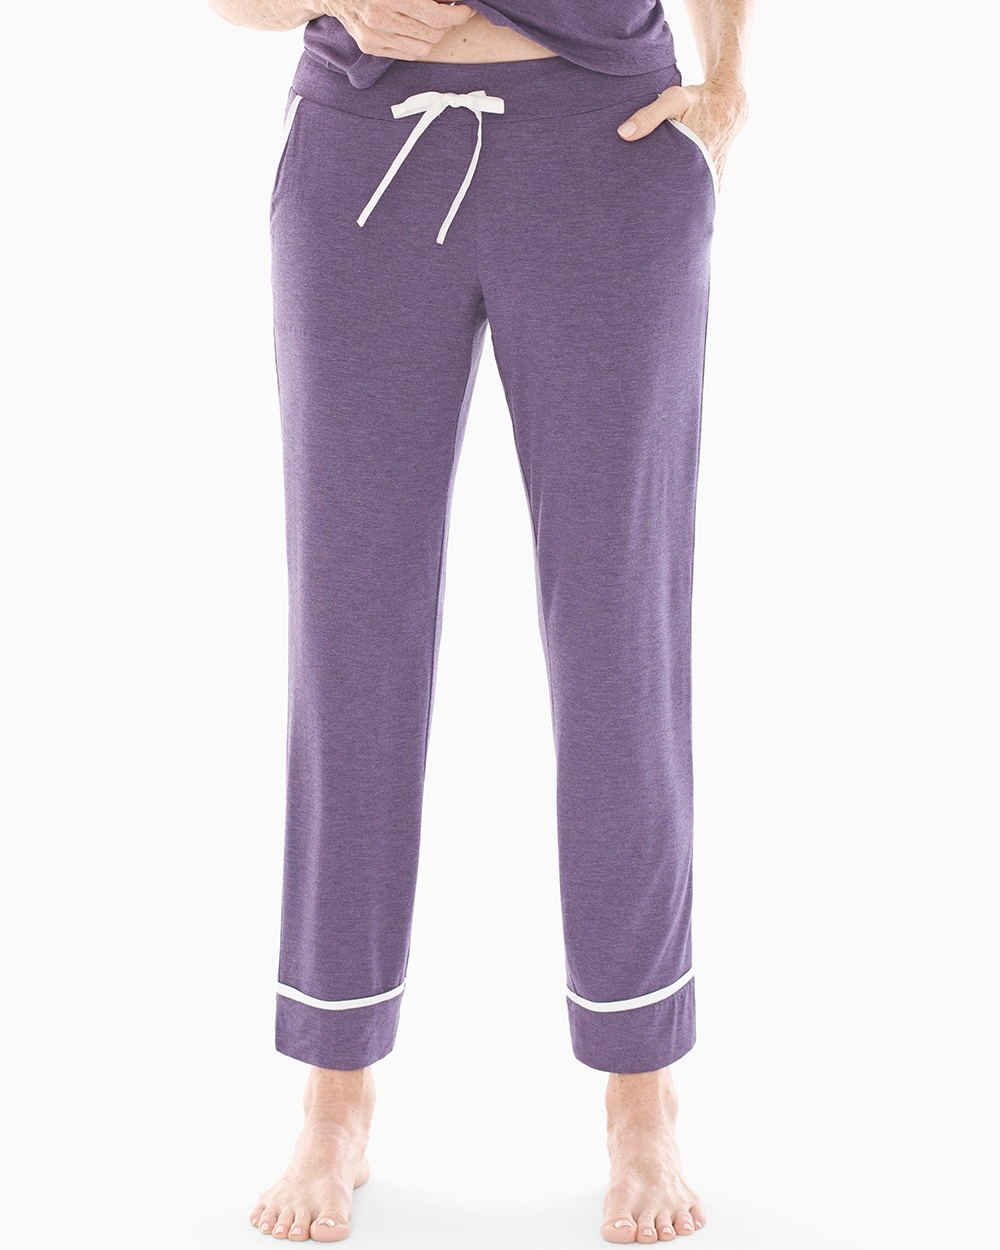 Cool Nights Satin Trim Ankle Pajama Pants Heather Black Violet